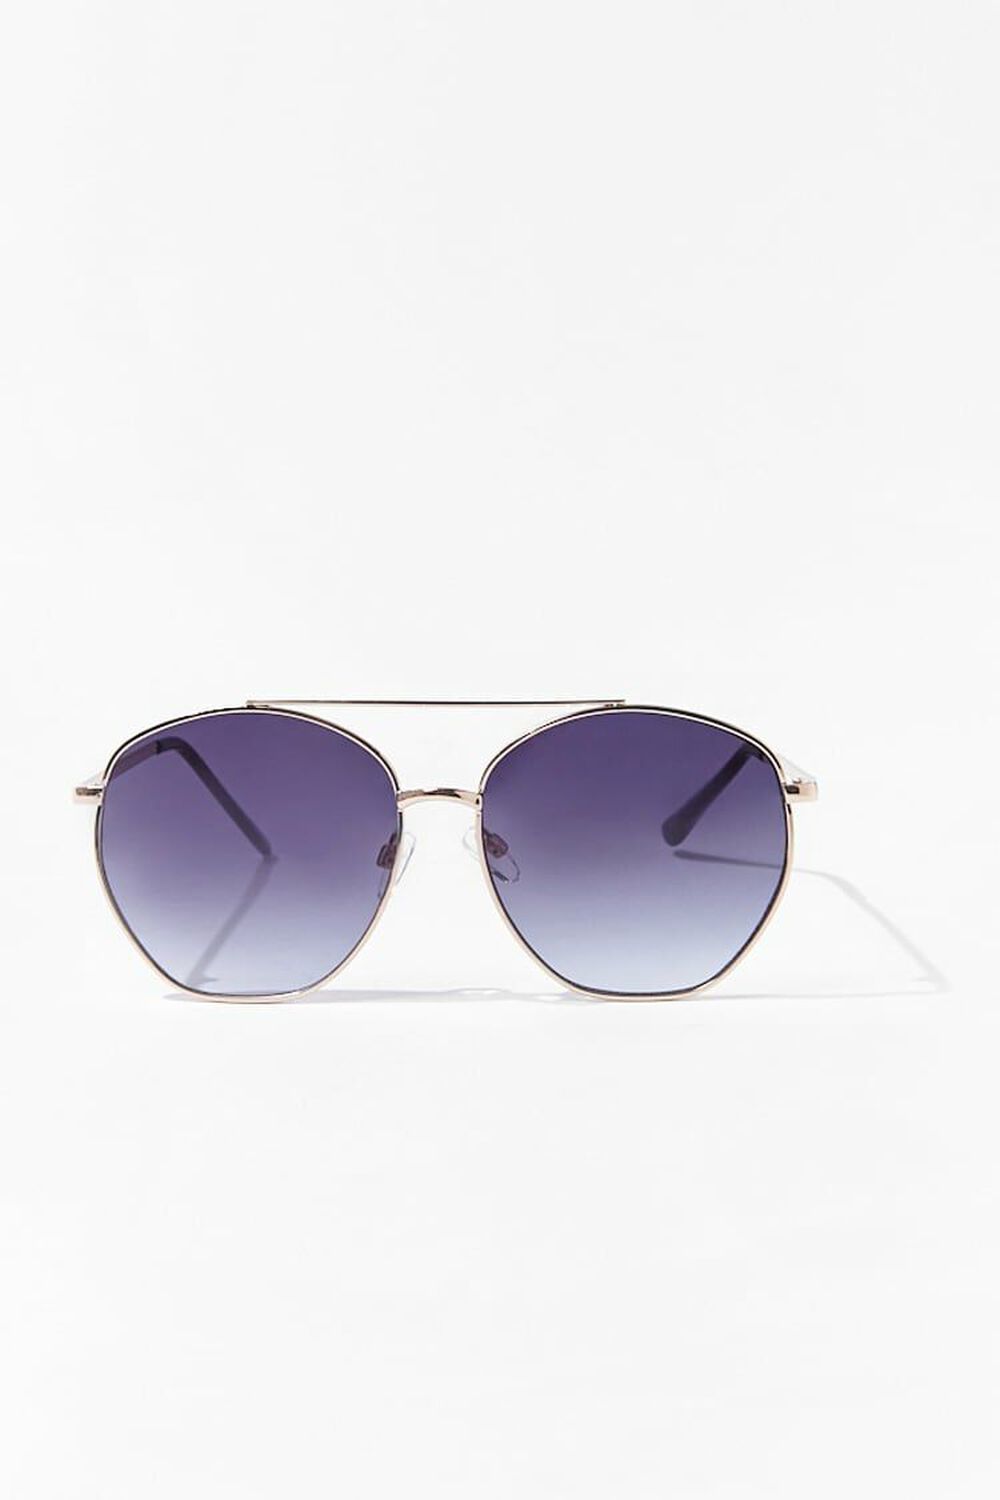 Metal Tinted Aviator Sunglasses, image 1